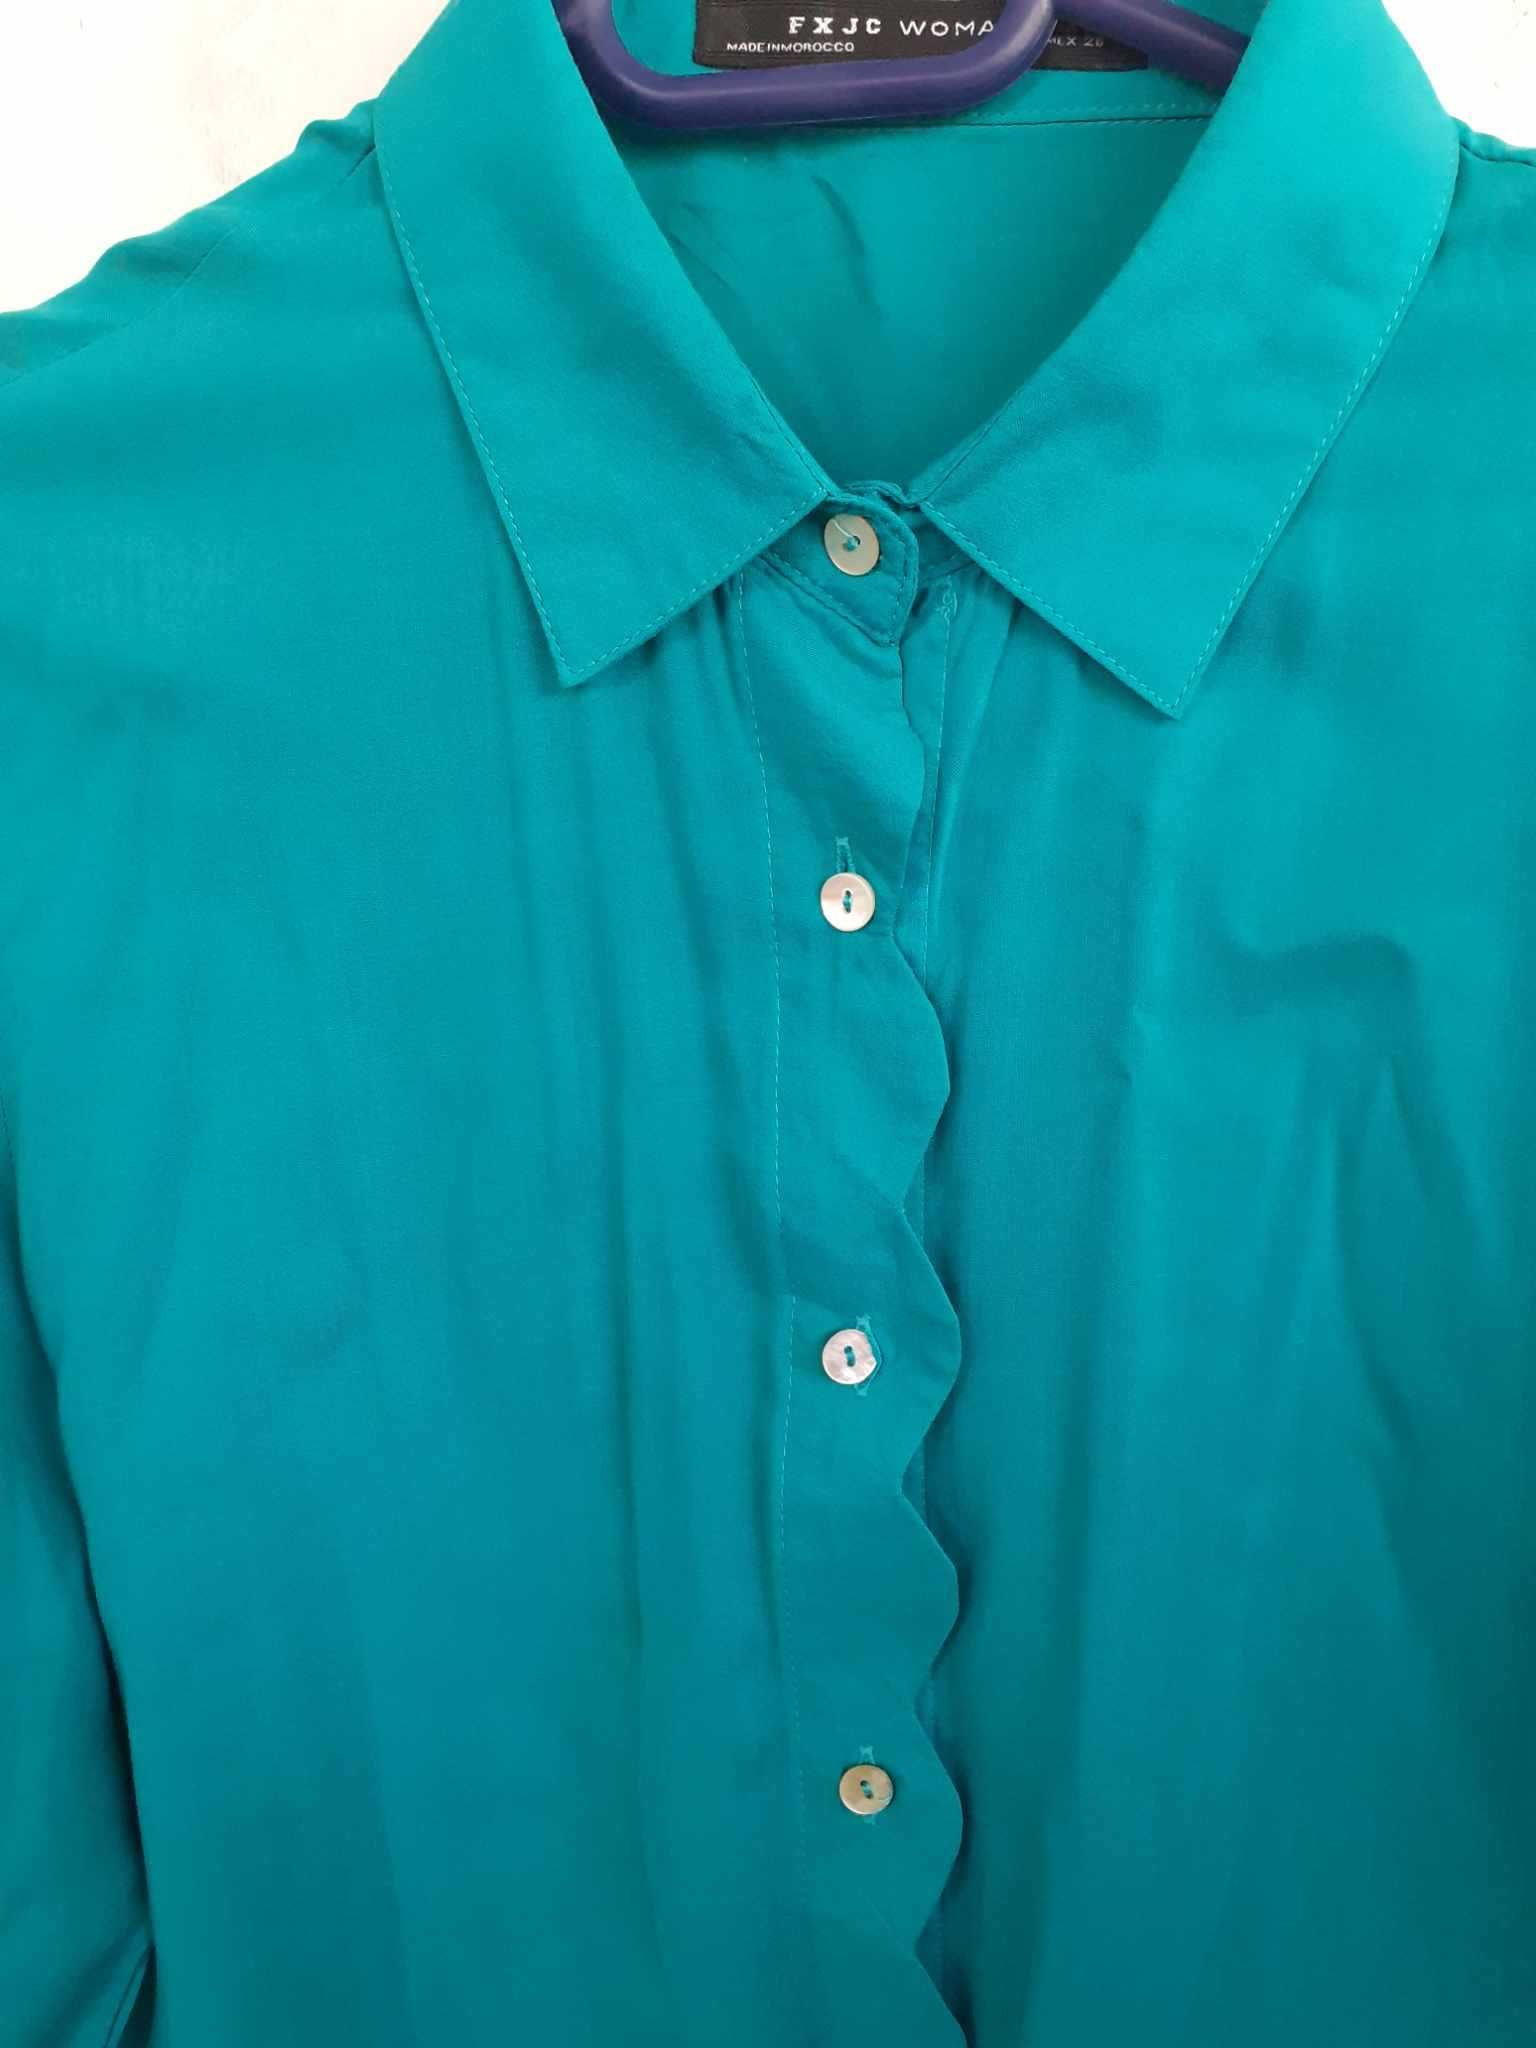 Дамска синьо-зелена риза